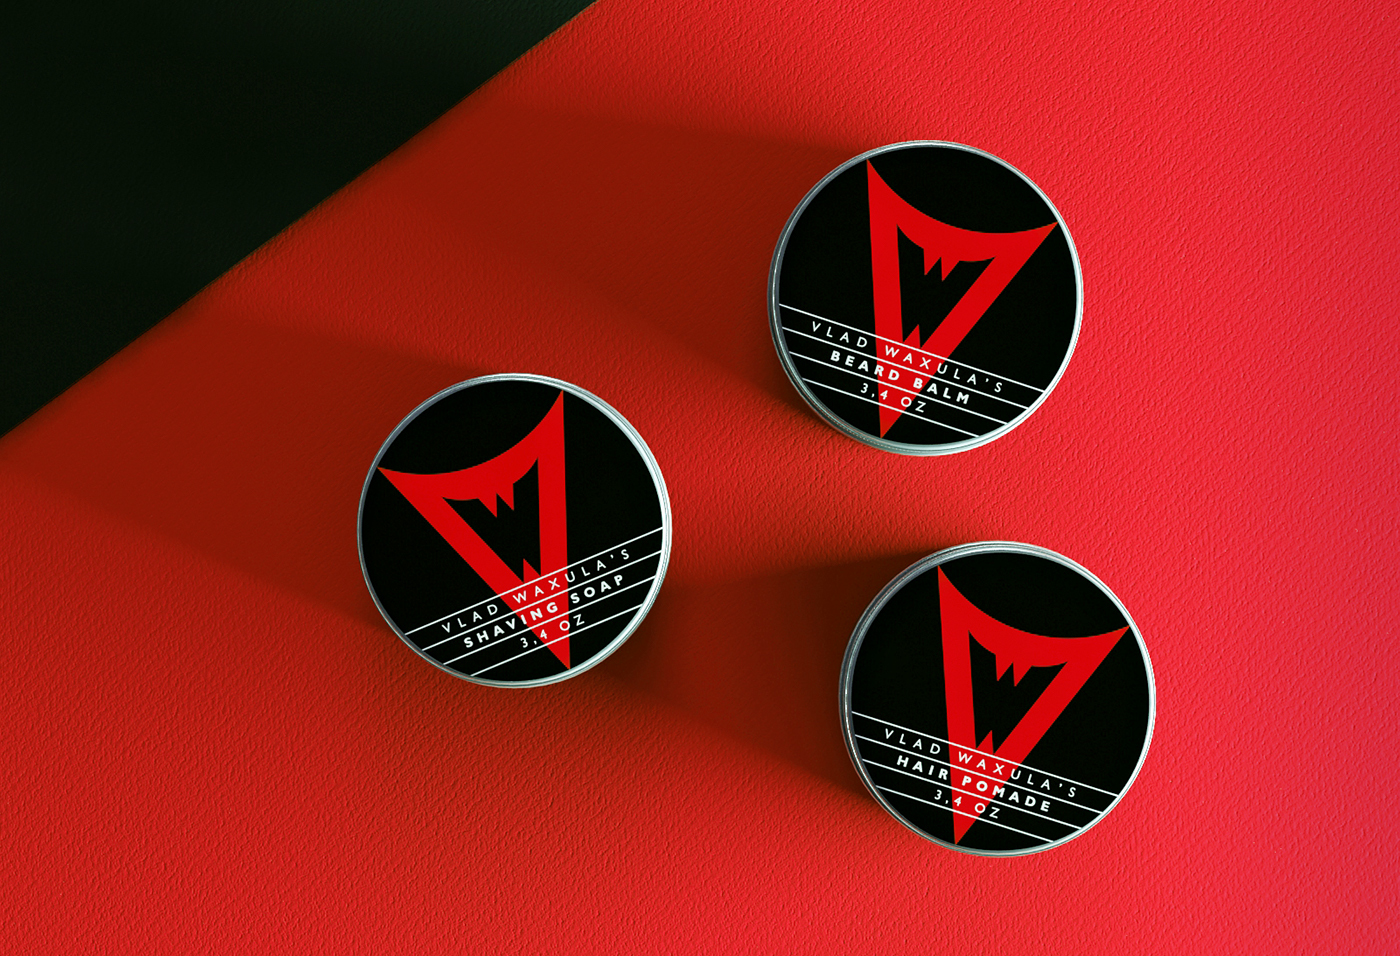 branding  grooming beard vampire bat dracula wax package design  Moscow Visual Communication